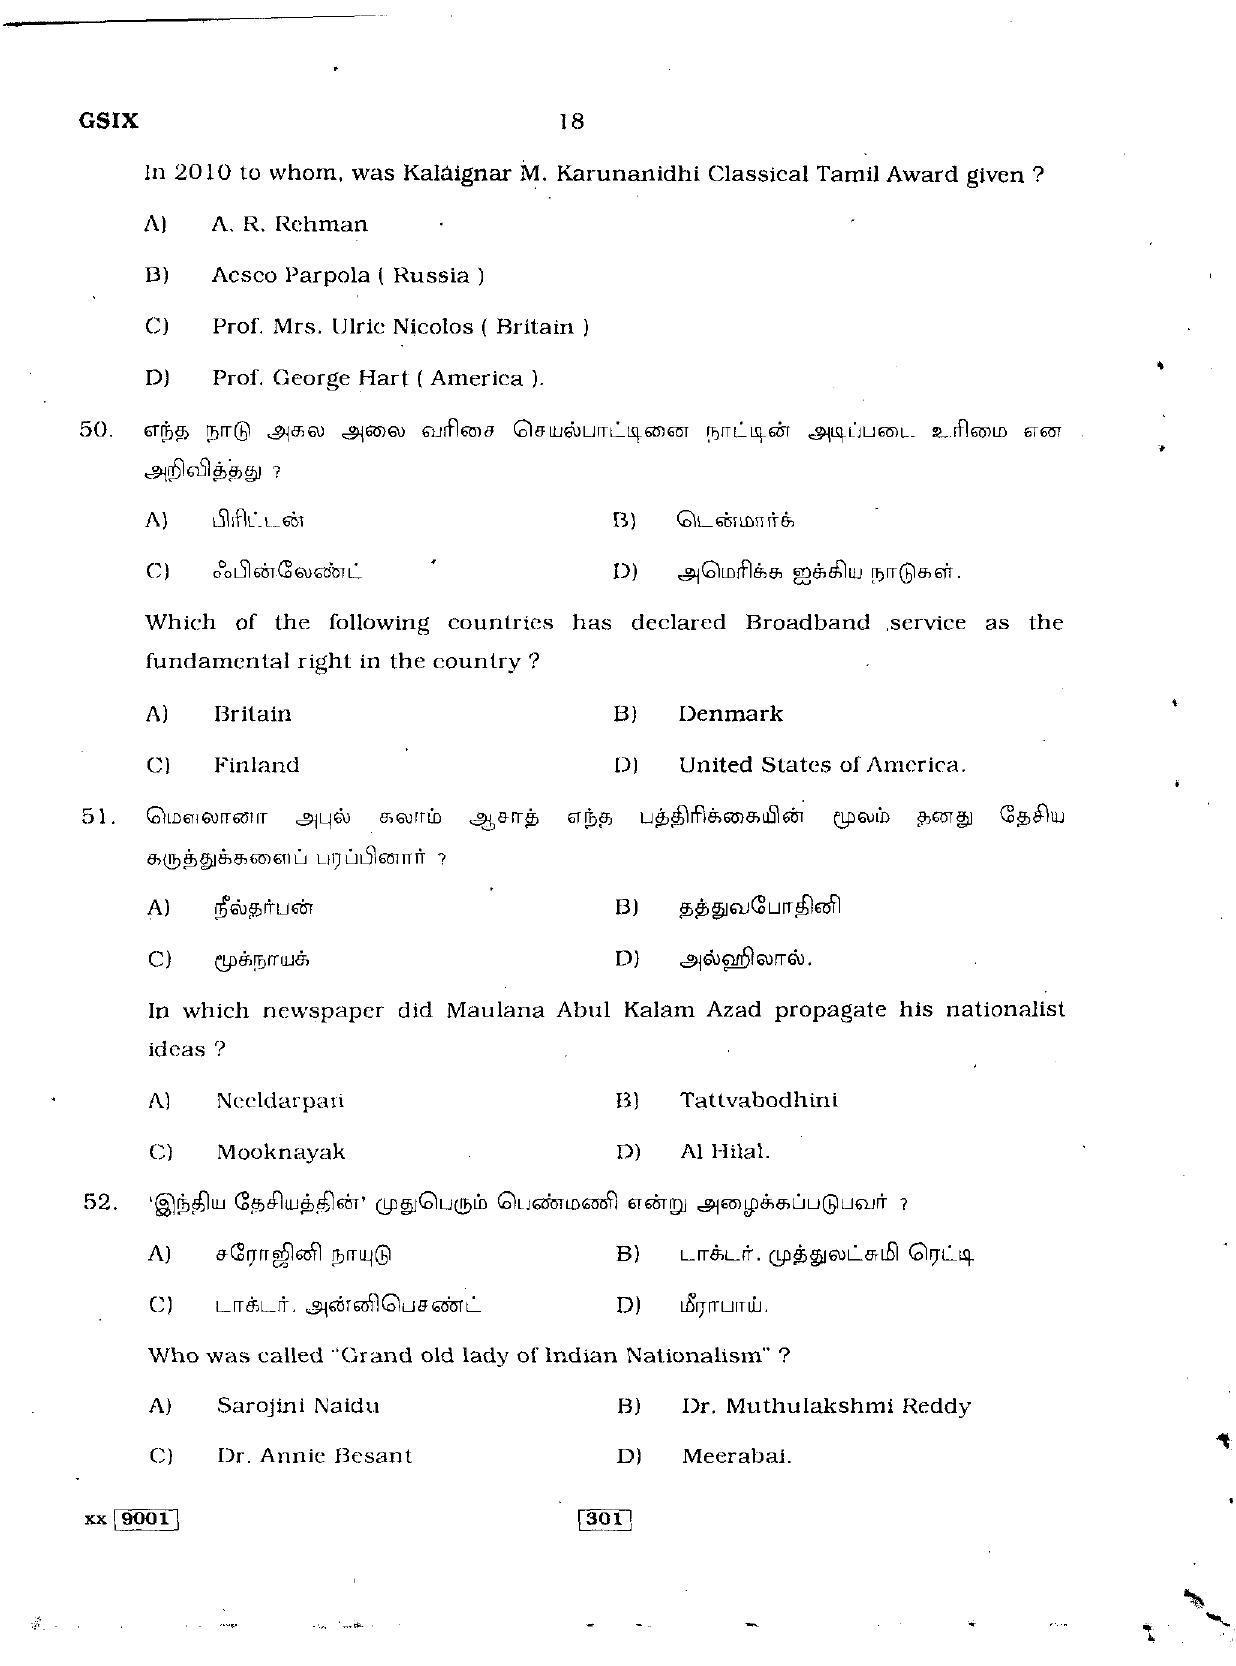 Delhi High Court Junior Judicial Assistant General Knowledge Previous Question Paper - Page 40